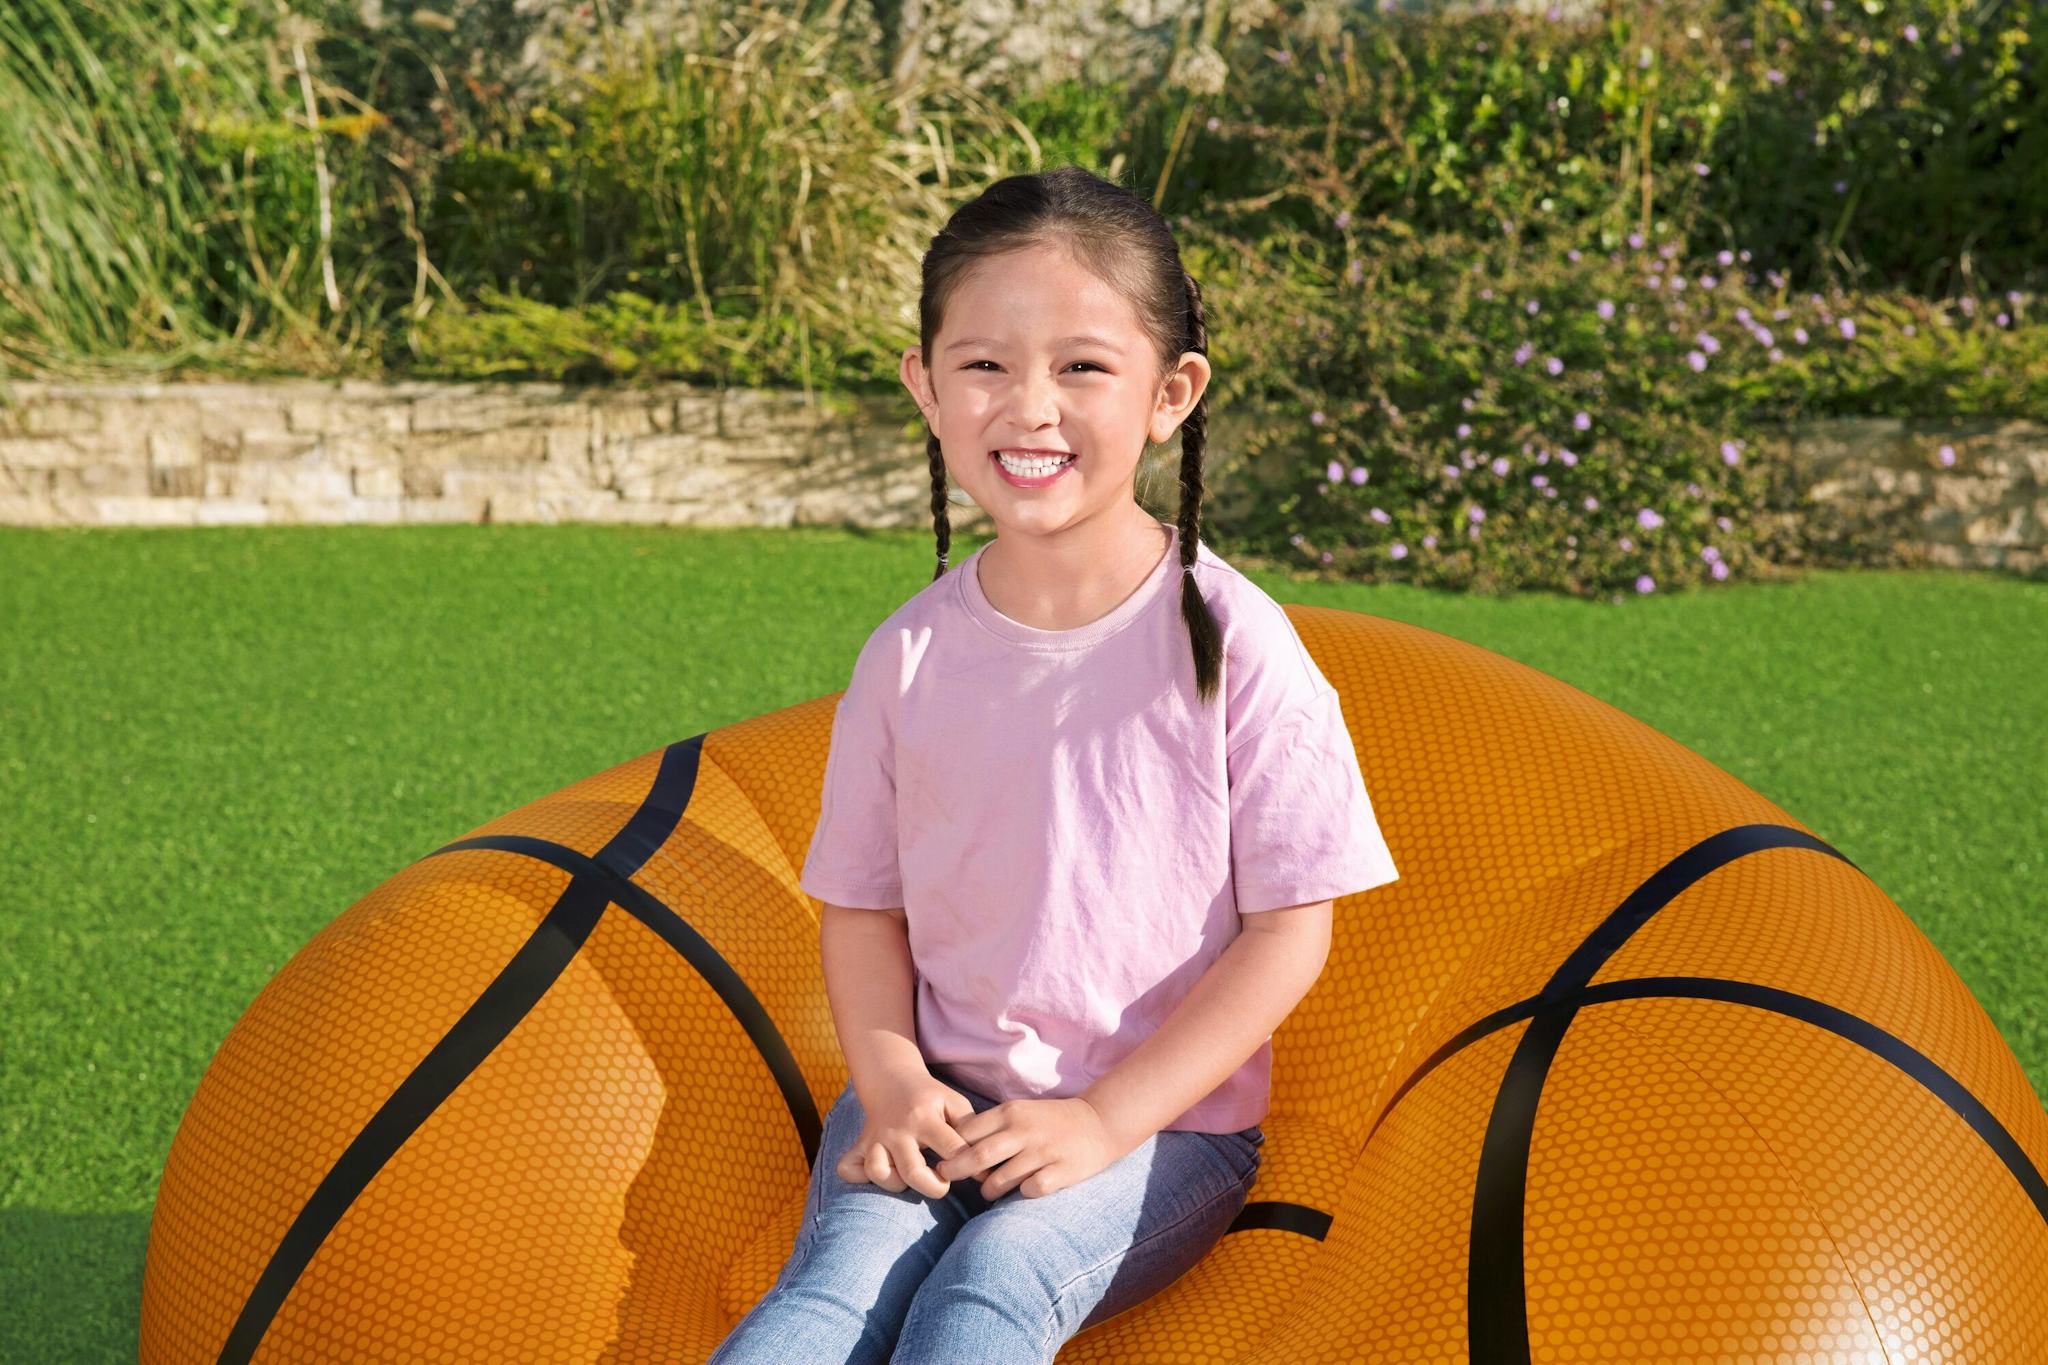 Giochi gonfiabili per bambini Poltrona pouf gonfiabile Basketball Bestway 12